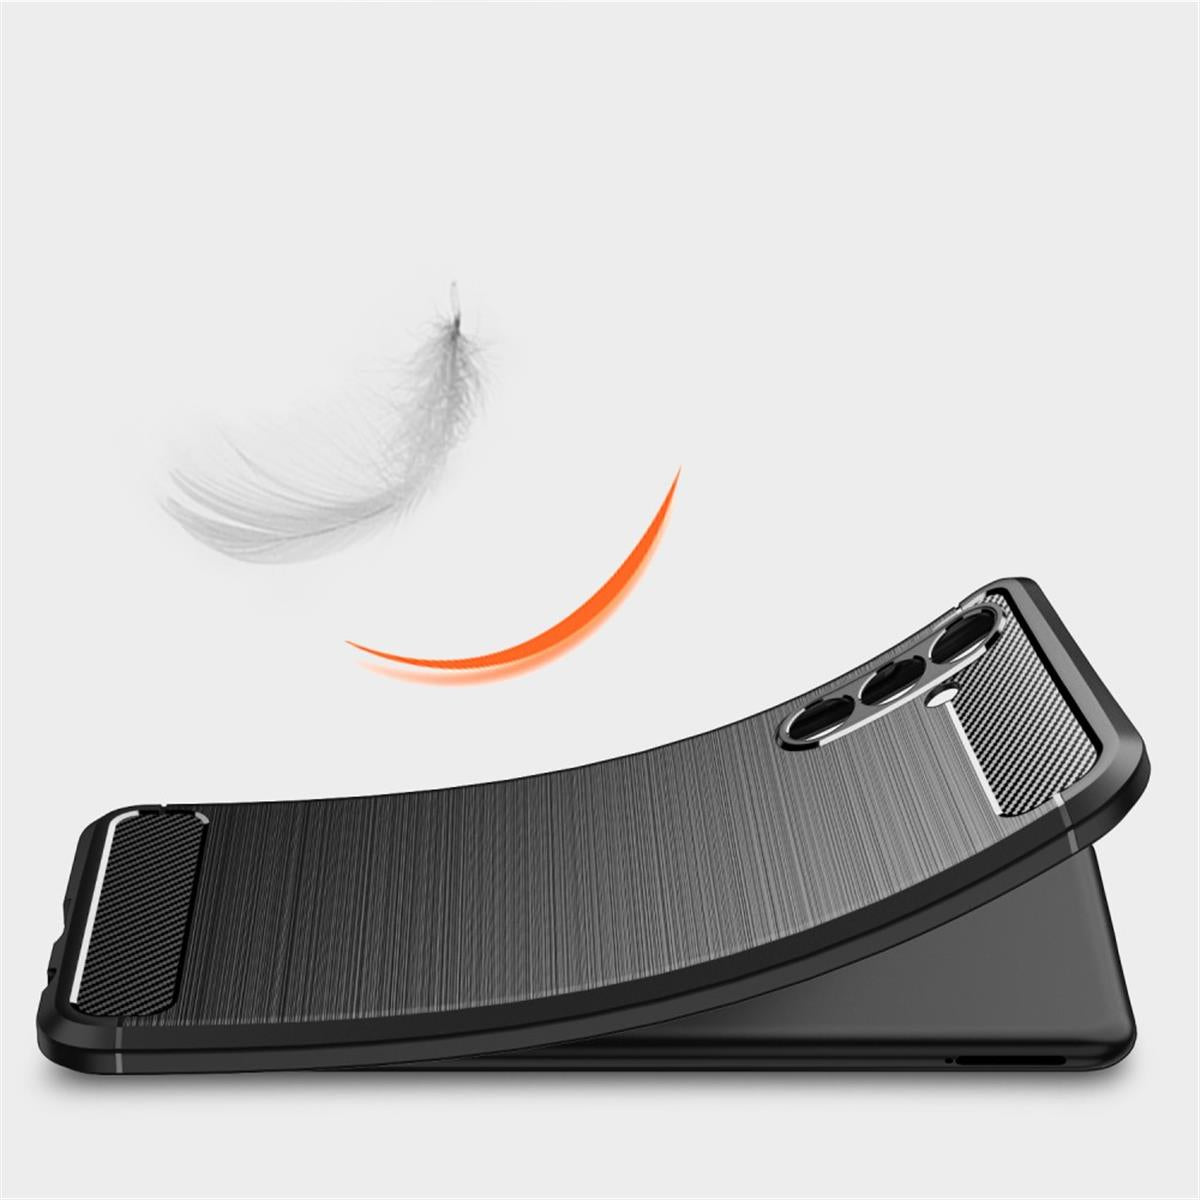 Hülle für Samsung Galaxy A13 5G/A04s Handyhülle Silikon Case Cover Carbonfarben